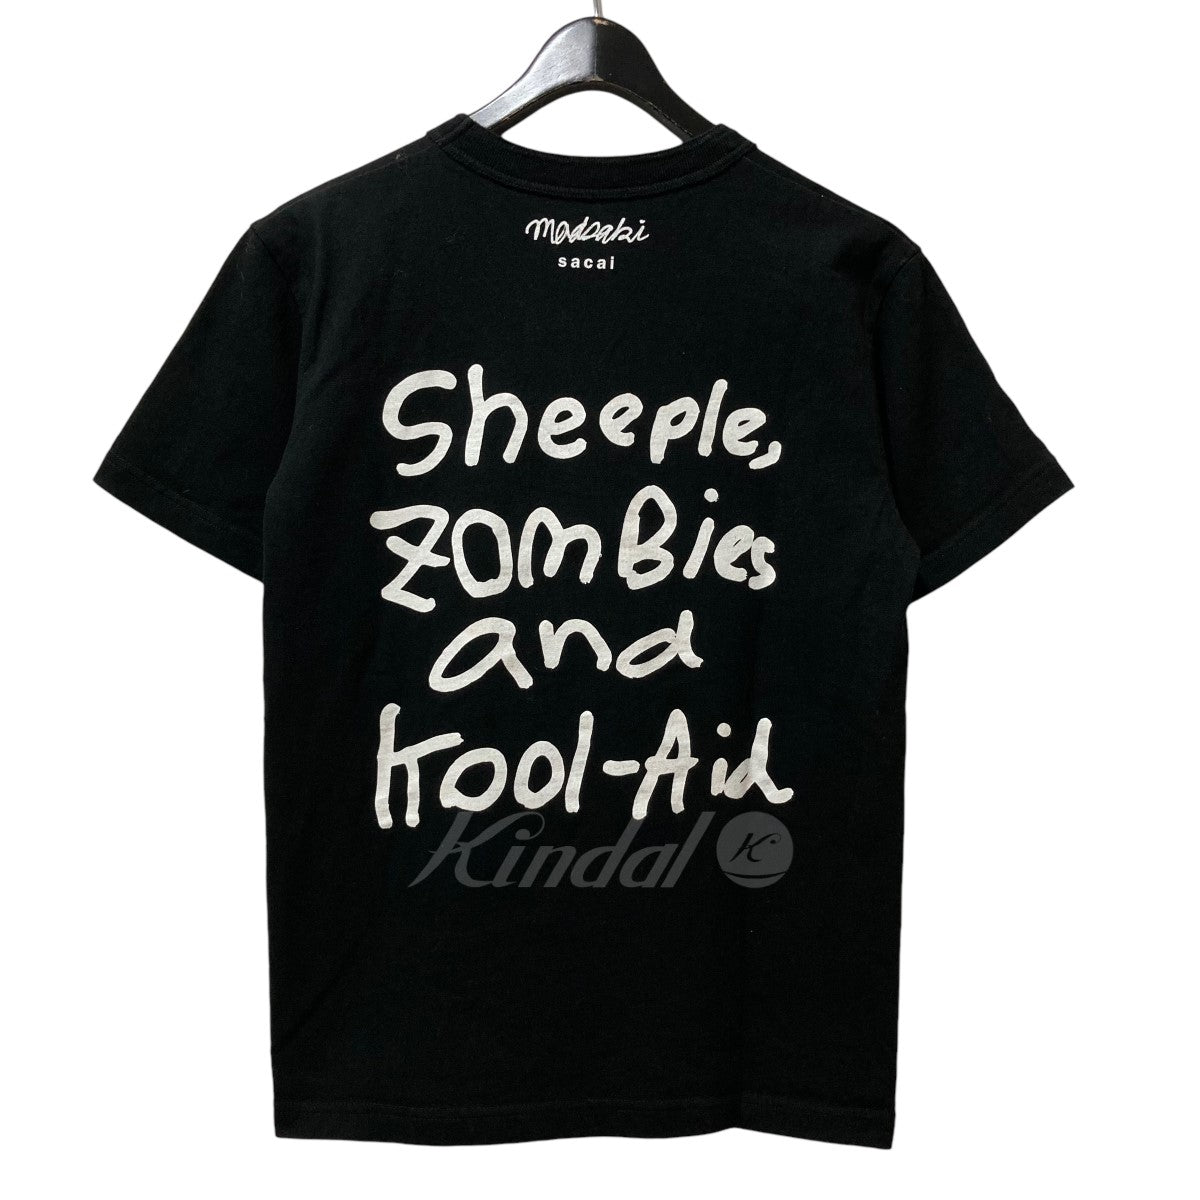 sacai(サカイ) MADSAKI Print T-Shirt プリント半袖Tシャツ 22-0408S ...